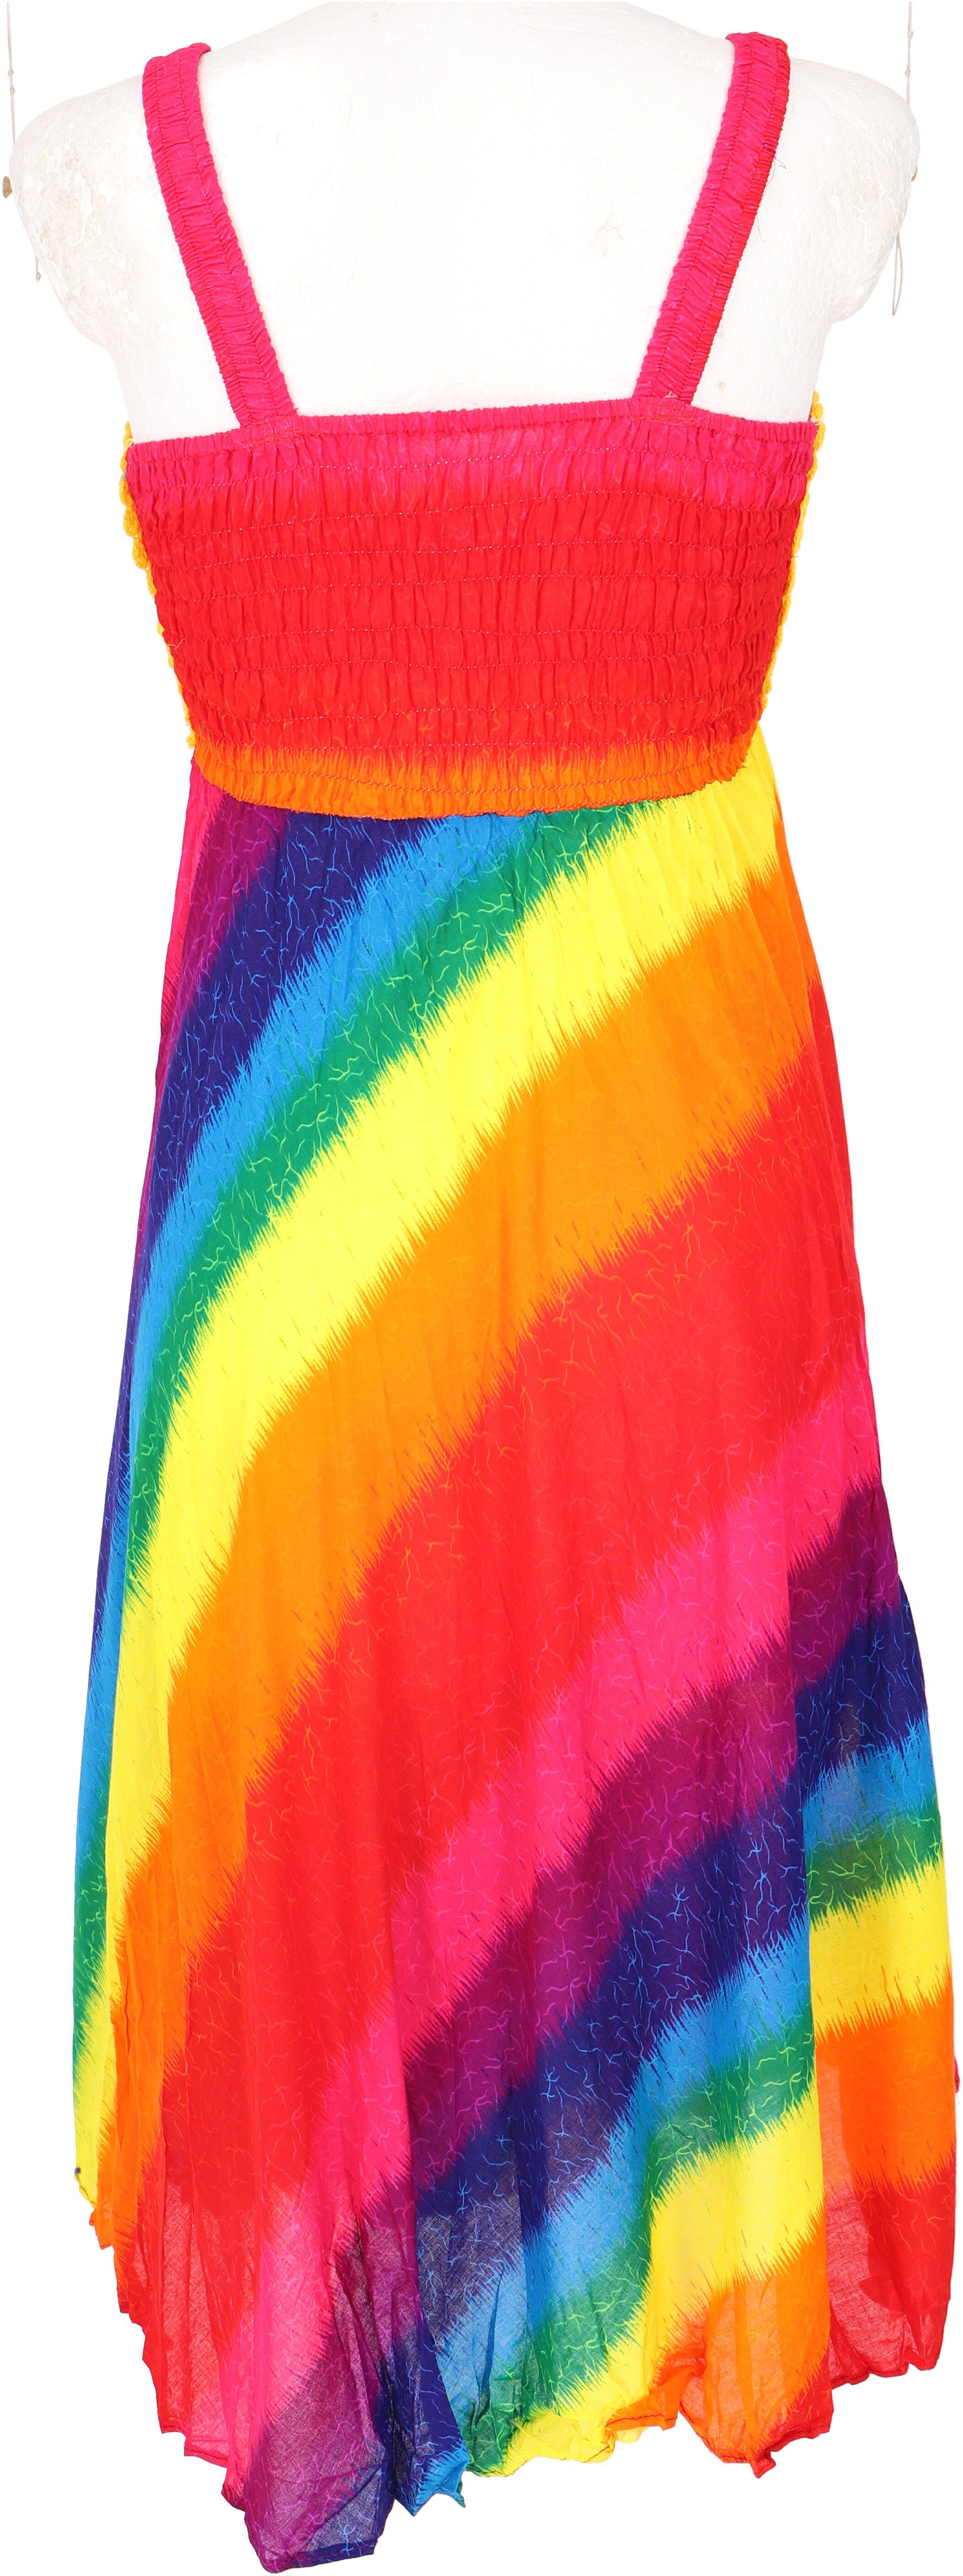 alternative Krinkelkleid Minikleid, -.. Guru-Shop Sommerkleid, Boho lemongrün regenbogen/ Midikleid Bekleidung